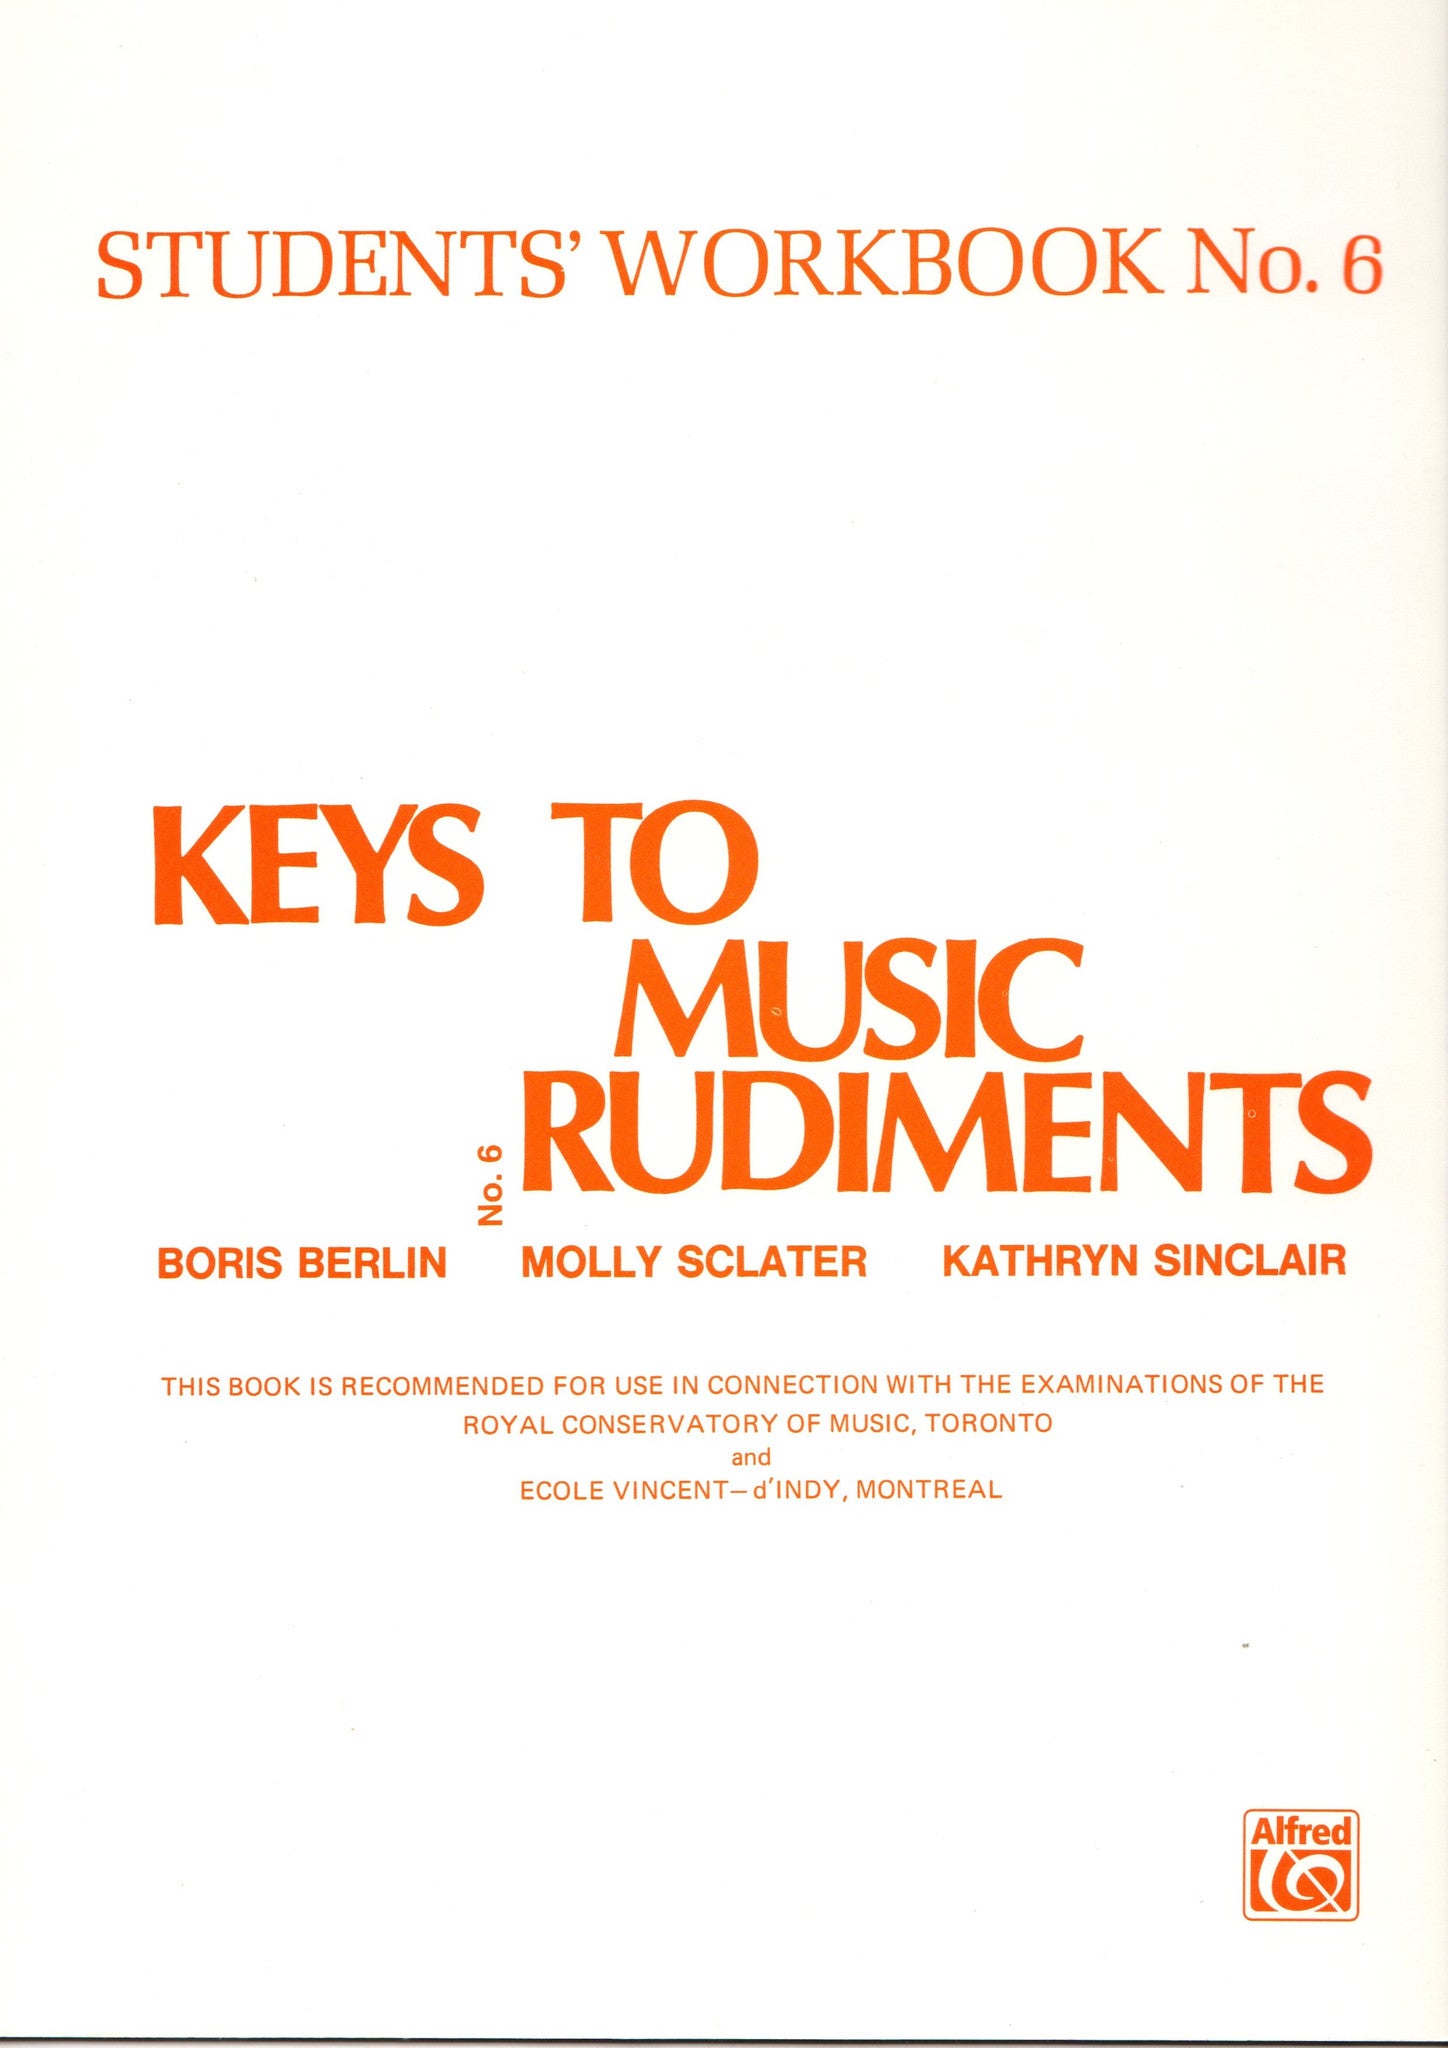 Keys to Music Rudiments - Students' Workbook No. 6 - Canada